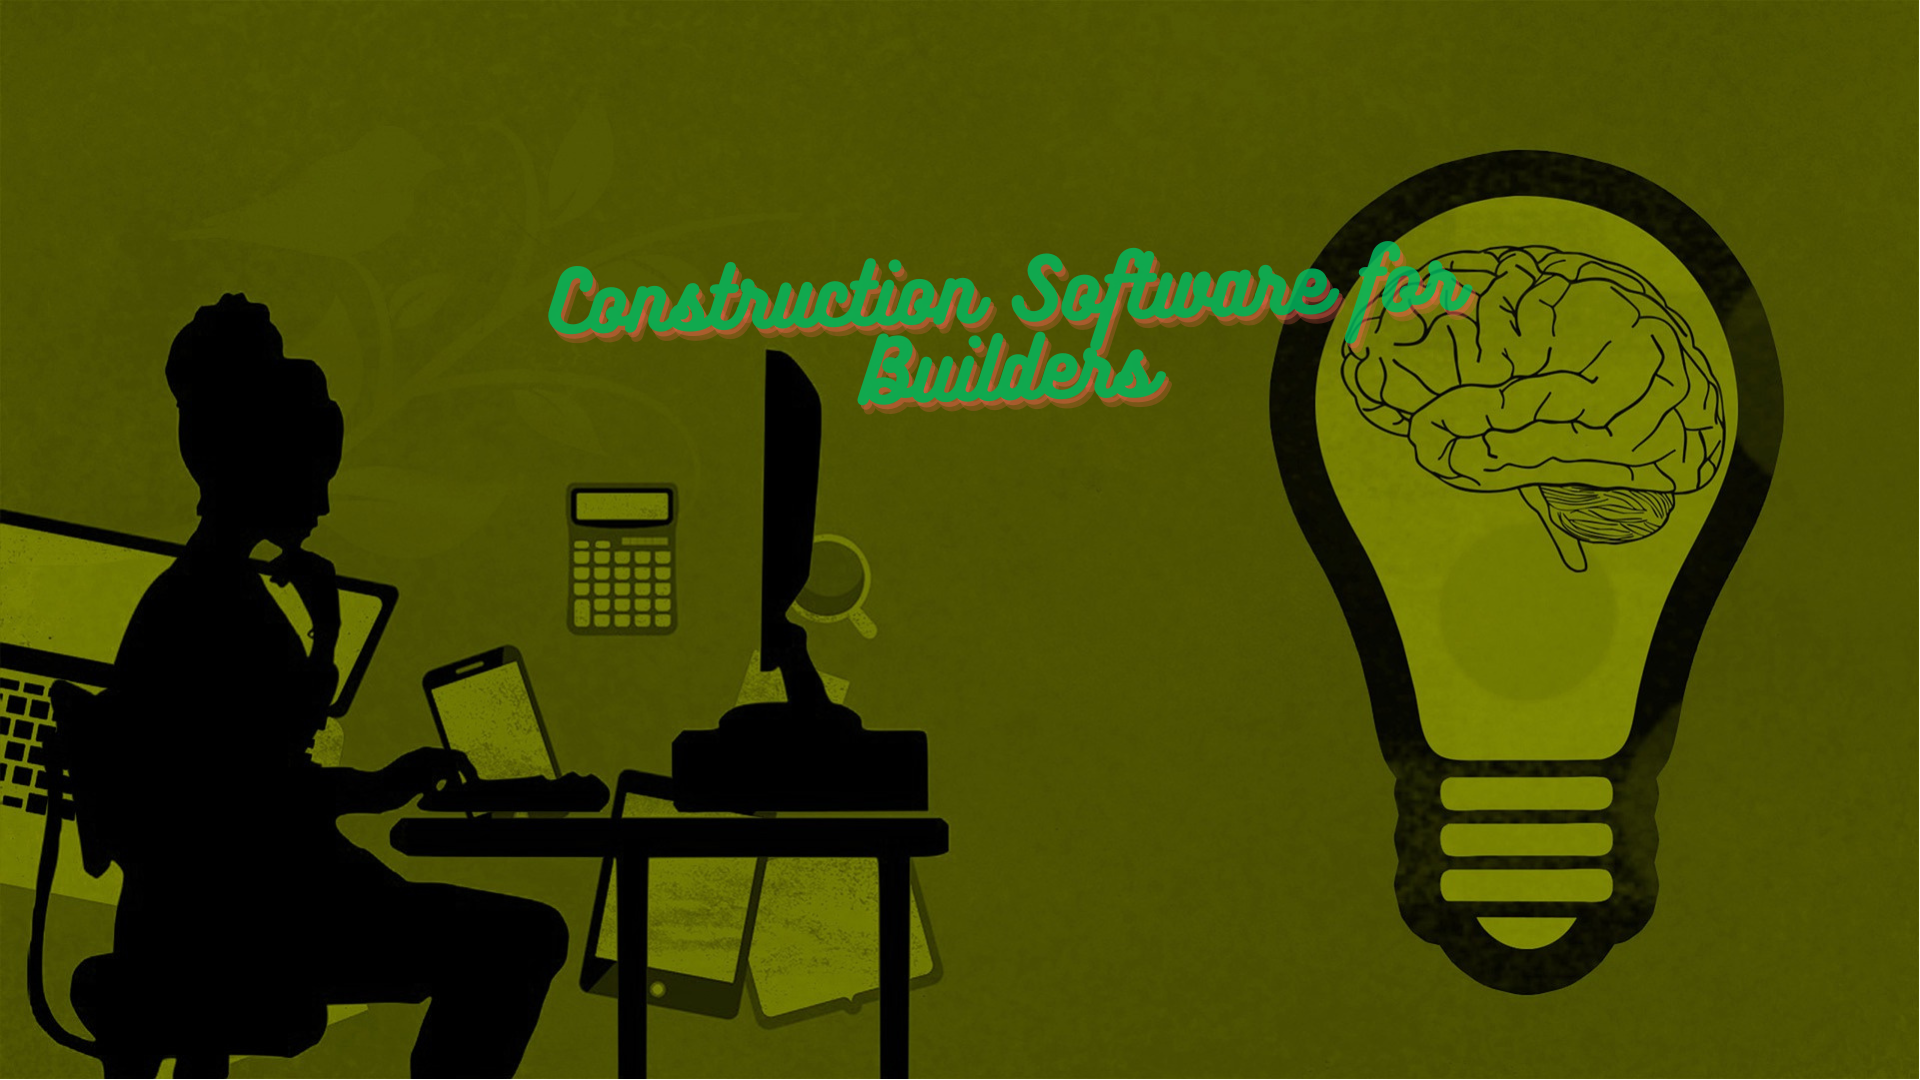 Secret Power: Construction Software for Builders